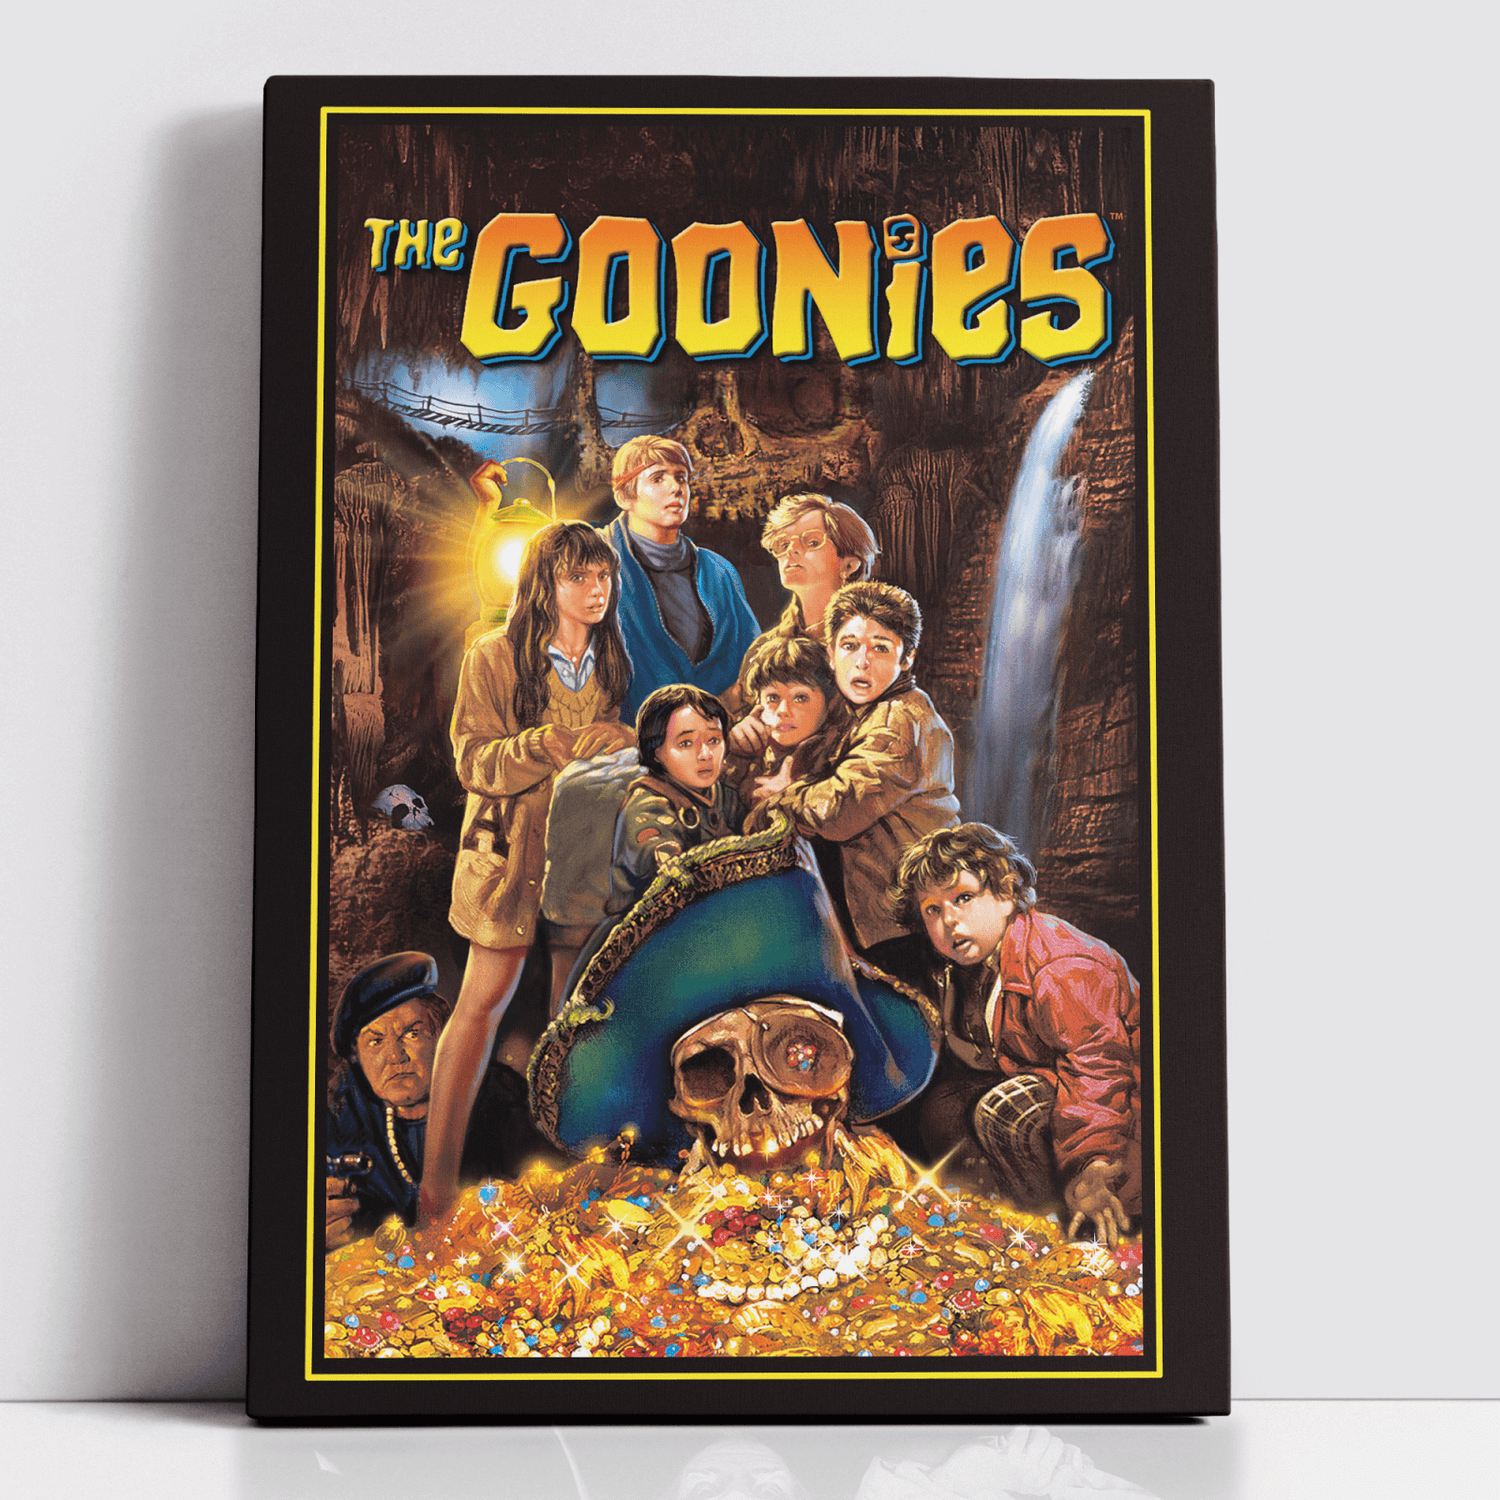 Decorsome x The Goonies Cover Art Rectangular Canvas